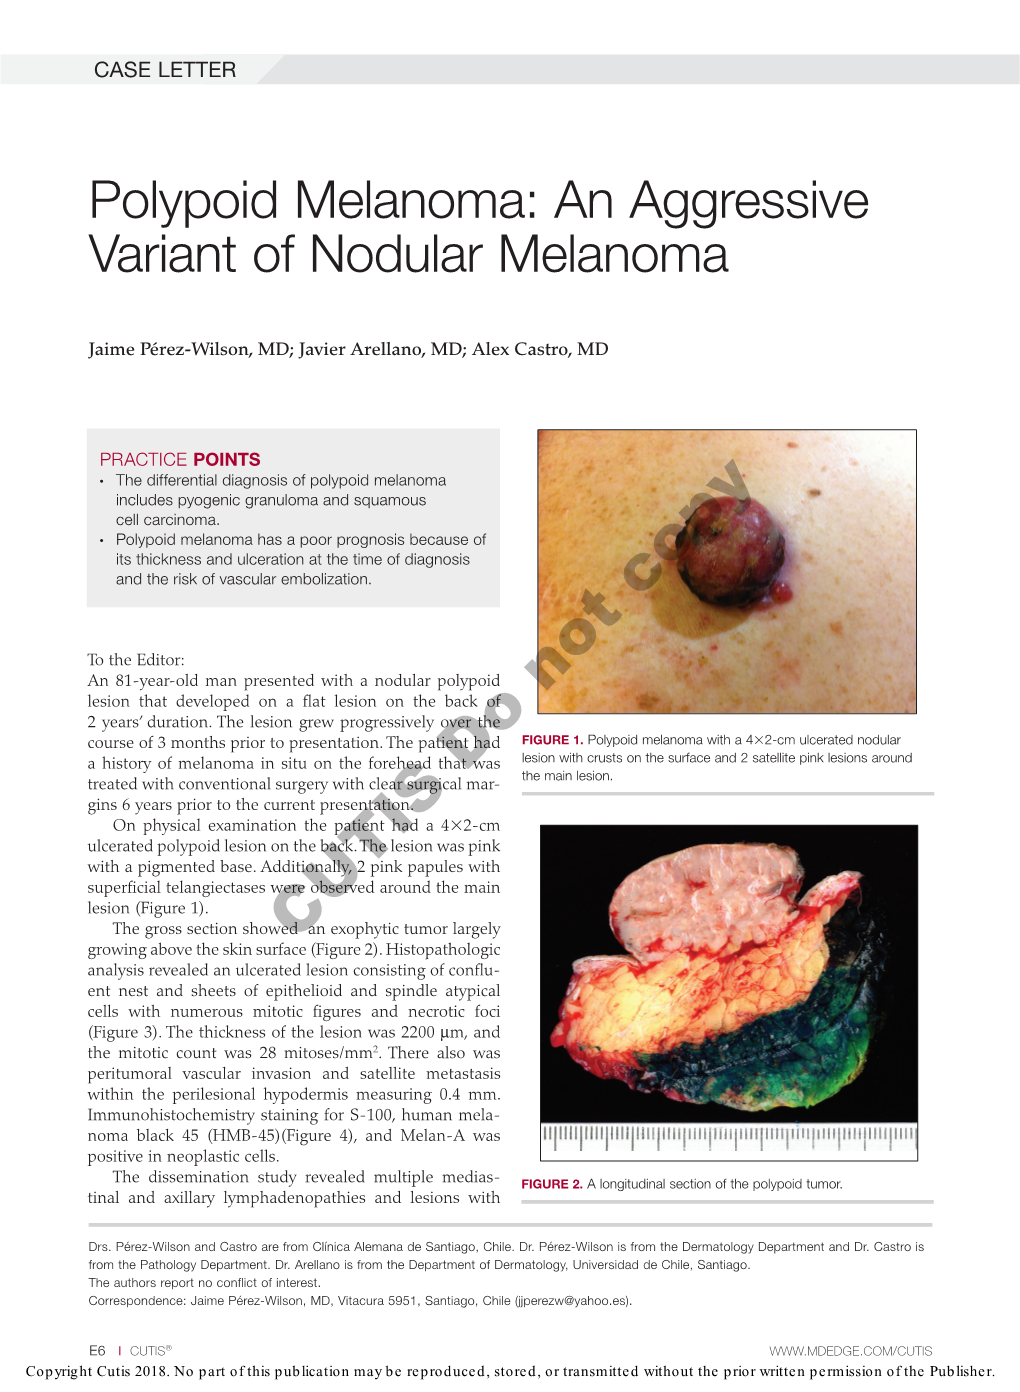 Polypoid Melanoma: an Aggressive Variant of Nodular Melanoma